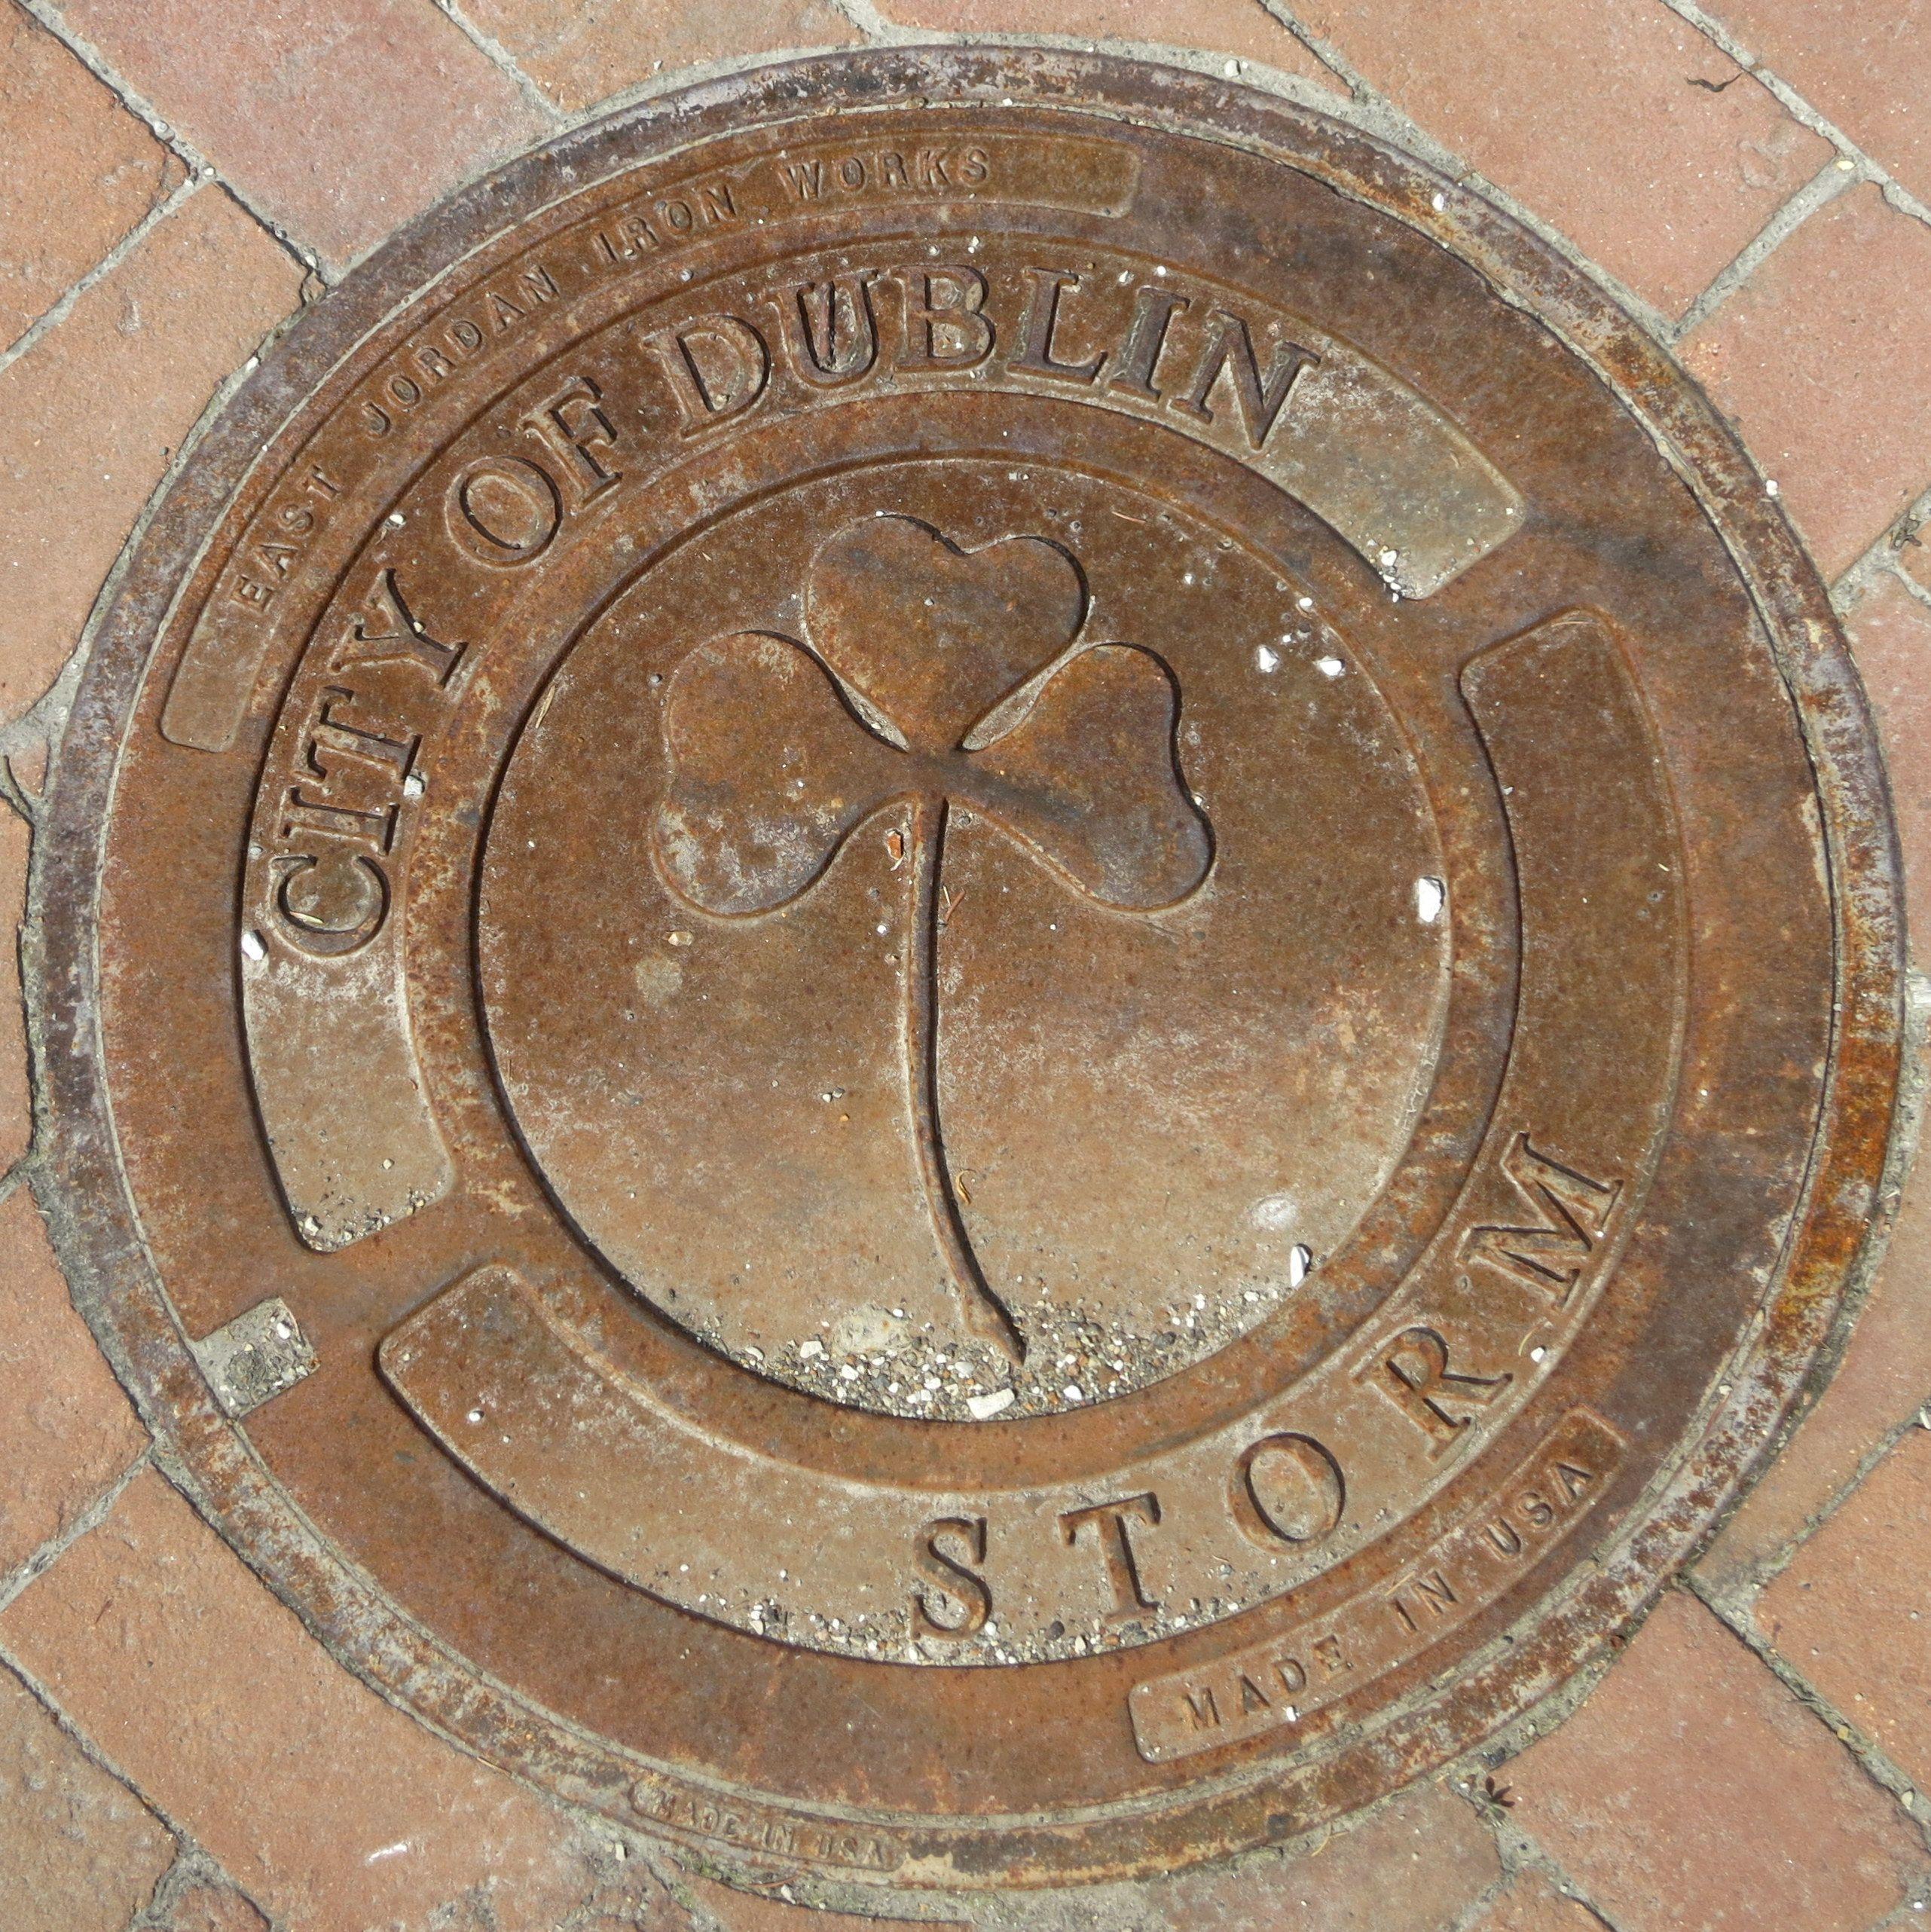 City of Dublin Ohio Logo - File:City of Dublin storm drain cover (Dublin, Ohio).JPG - Wikimedia ...